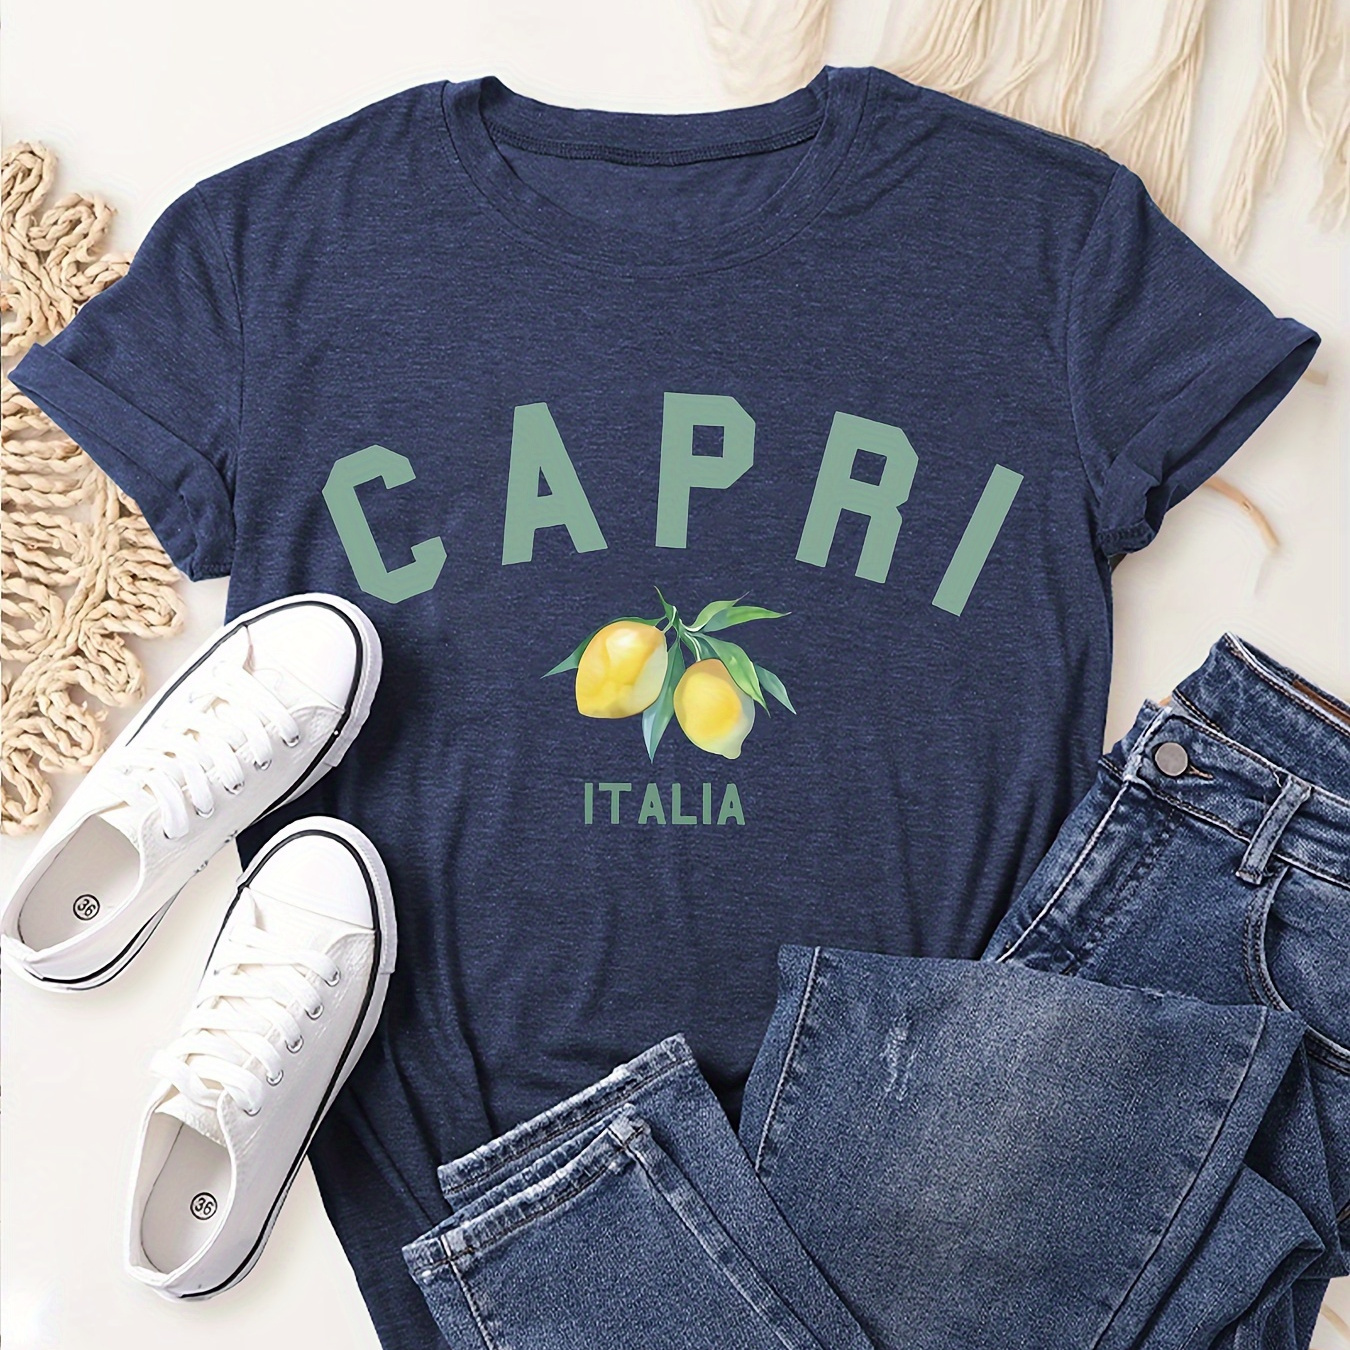 

Capri Print Crew Neck T-shirt, Casual Short Sleeve Top For Spring & Summer, Women's Clothing